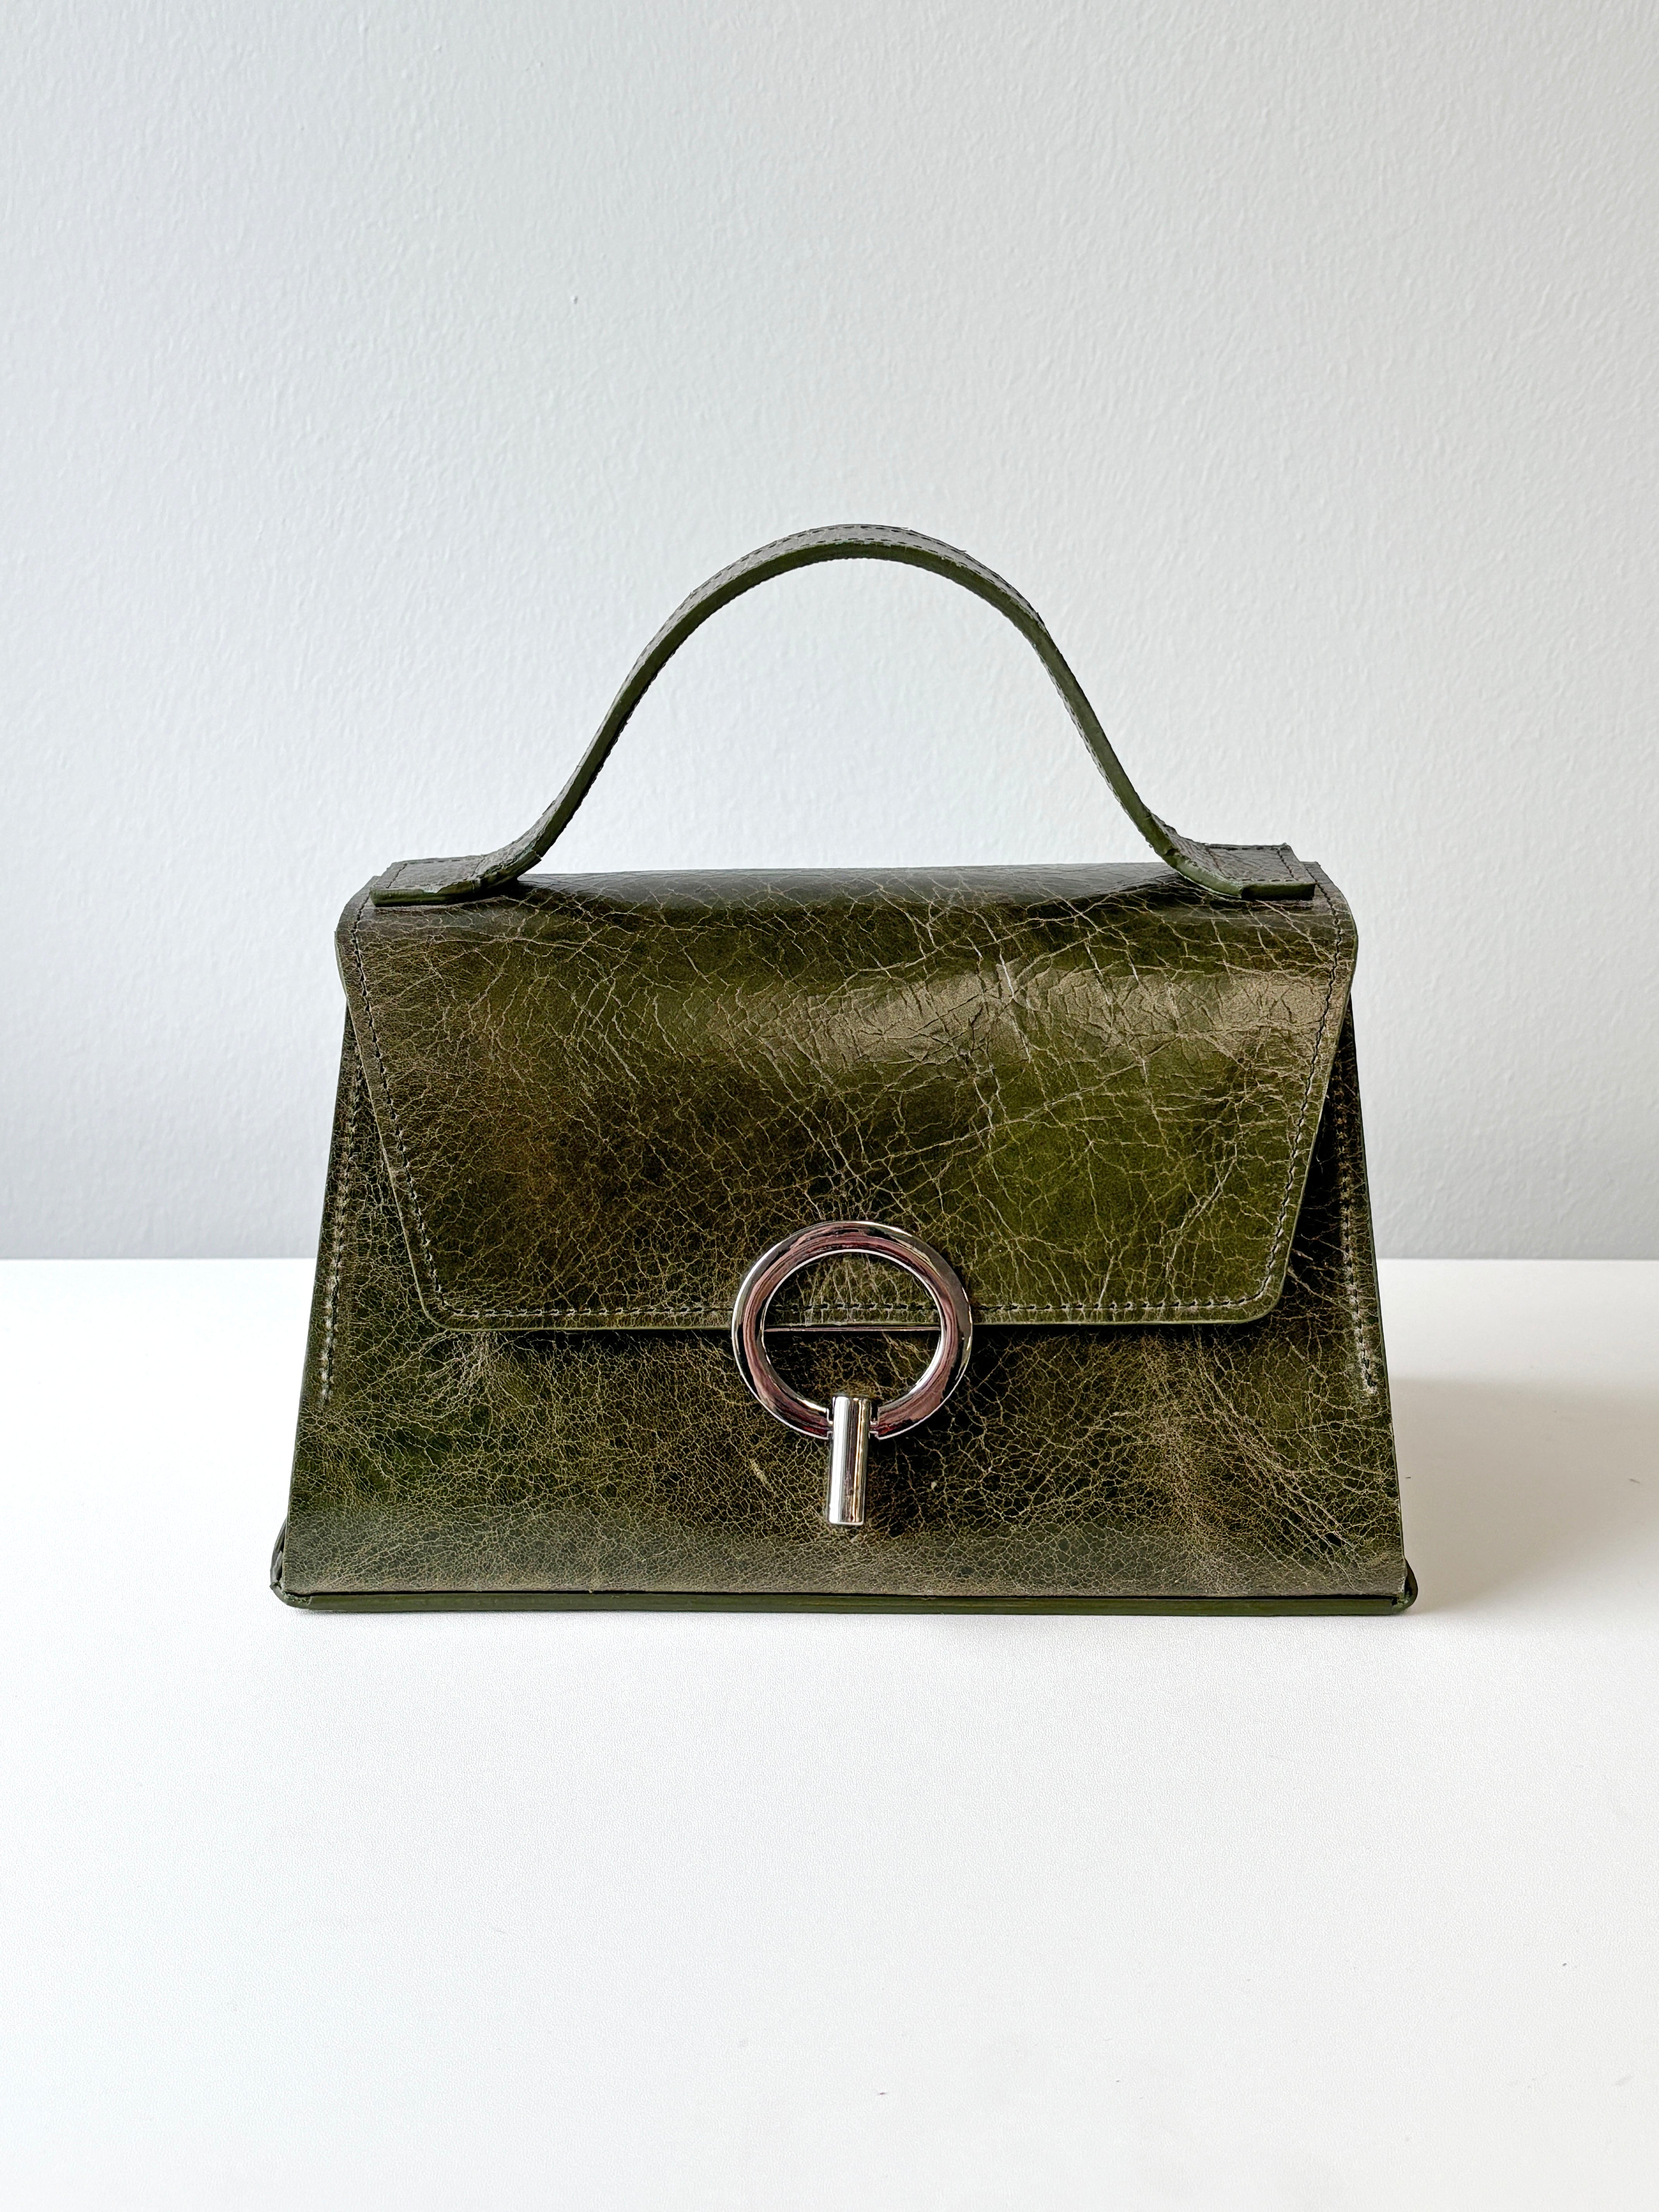 Studyus Ring Handbag in green